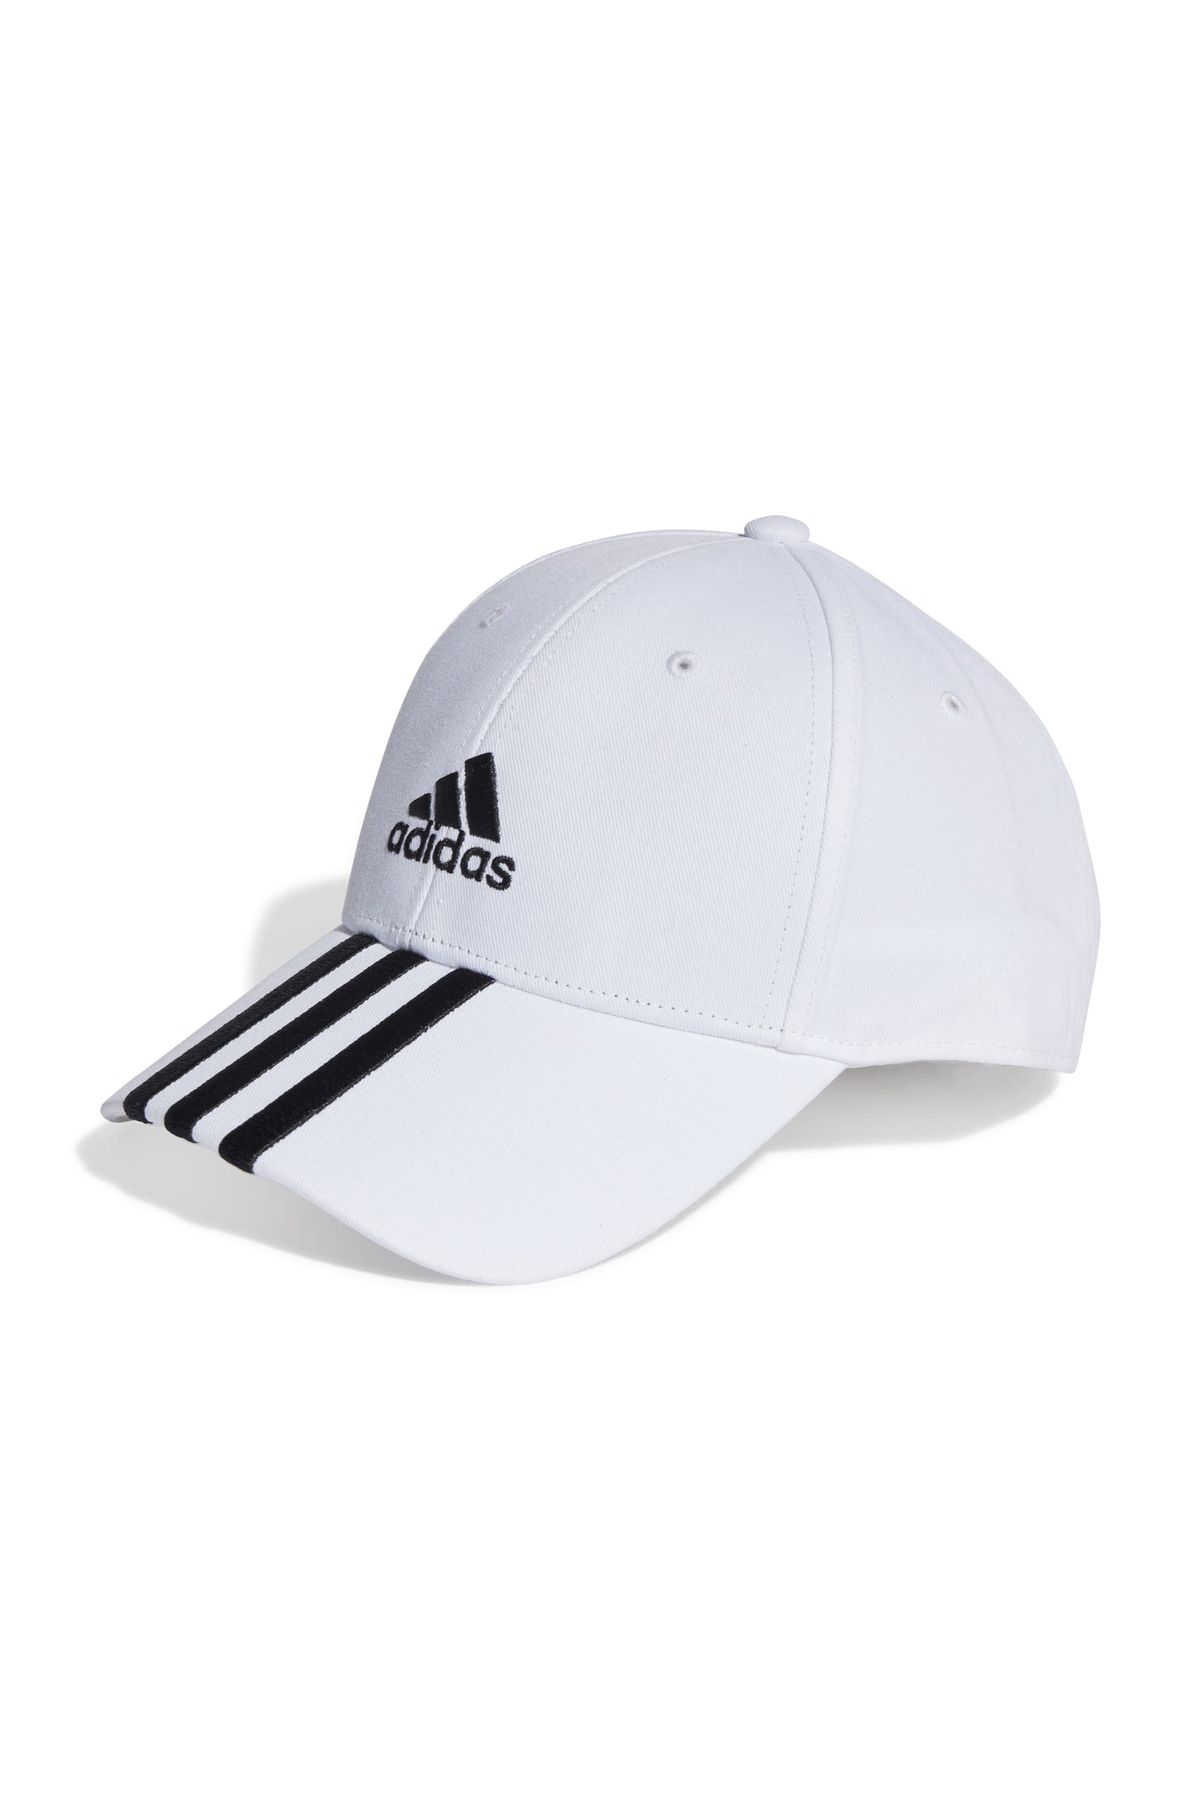 adidas ii3509-u adidas bball 3s کلاه ct سفید